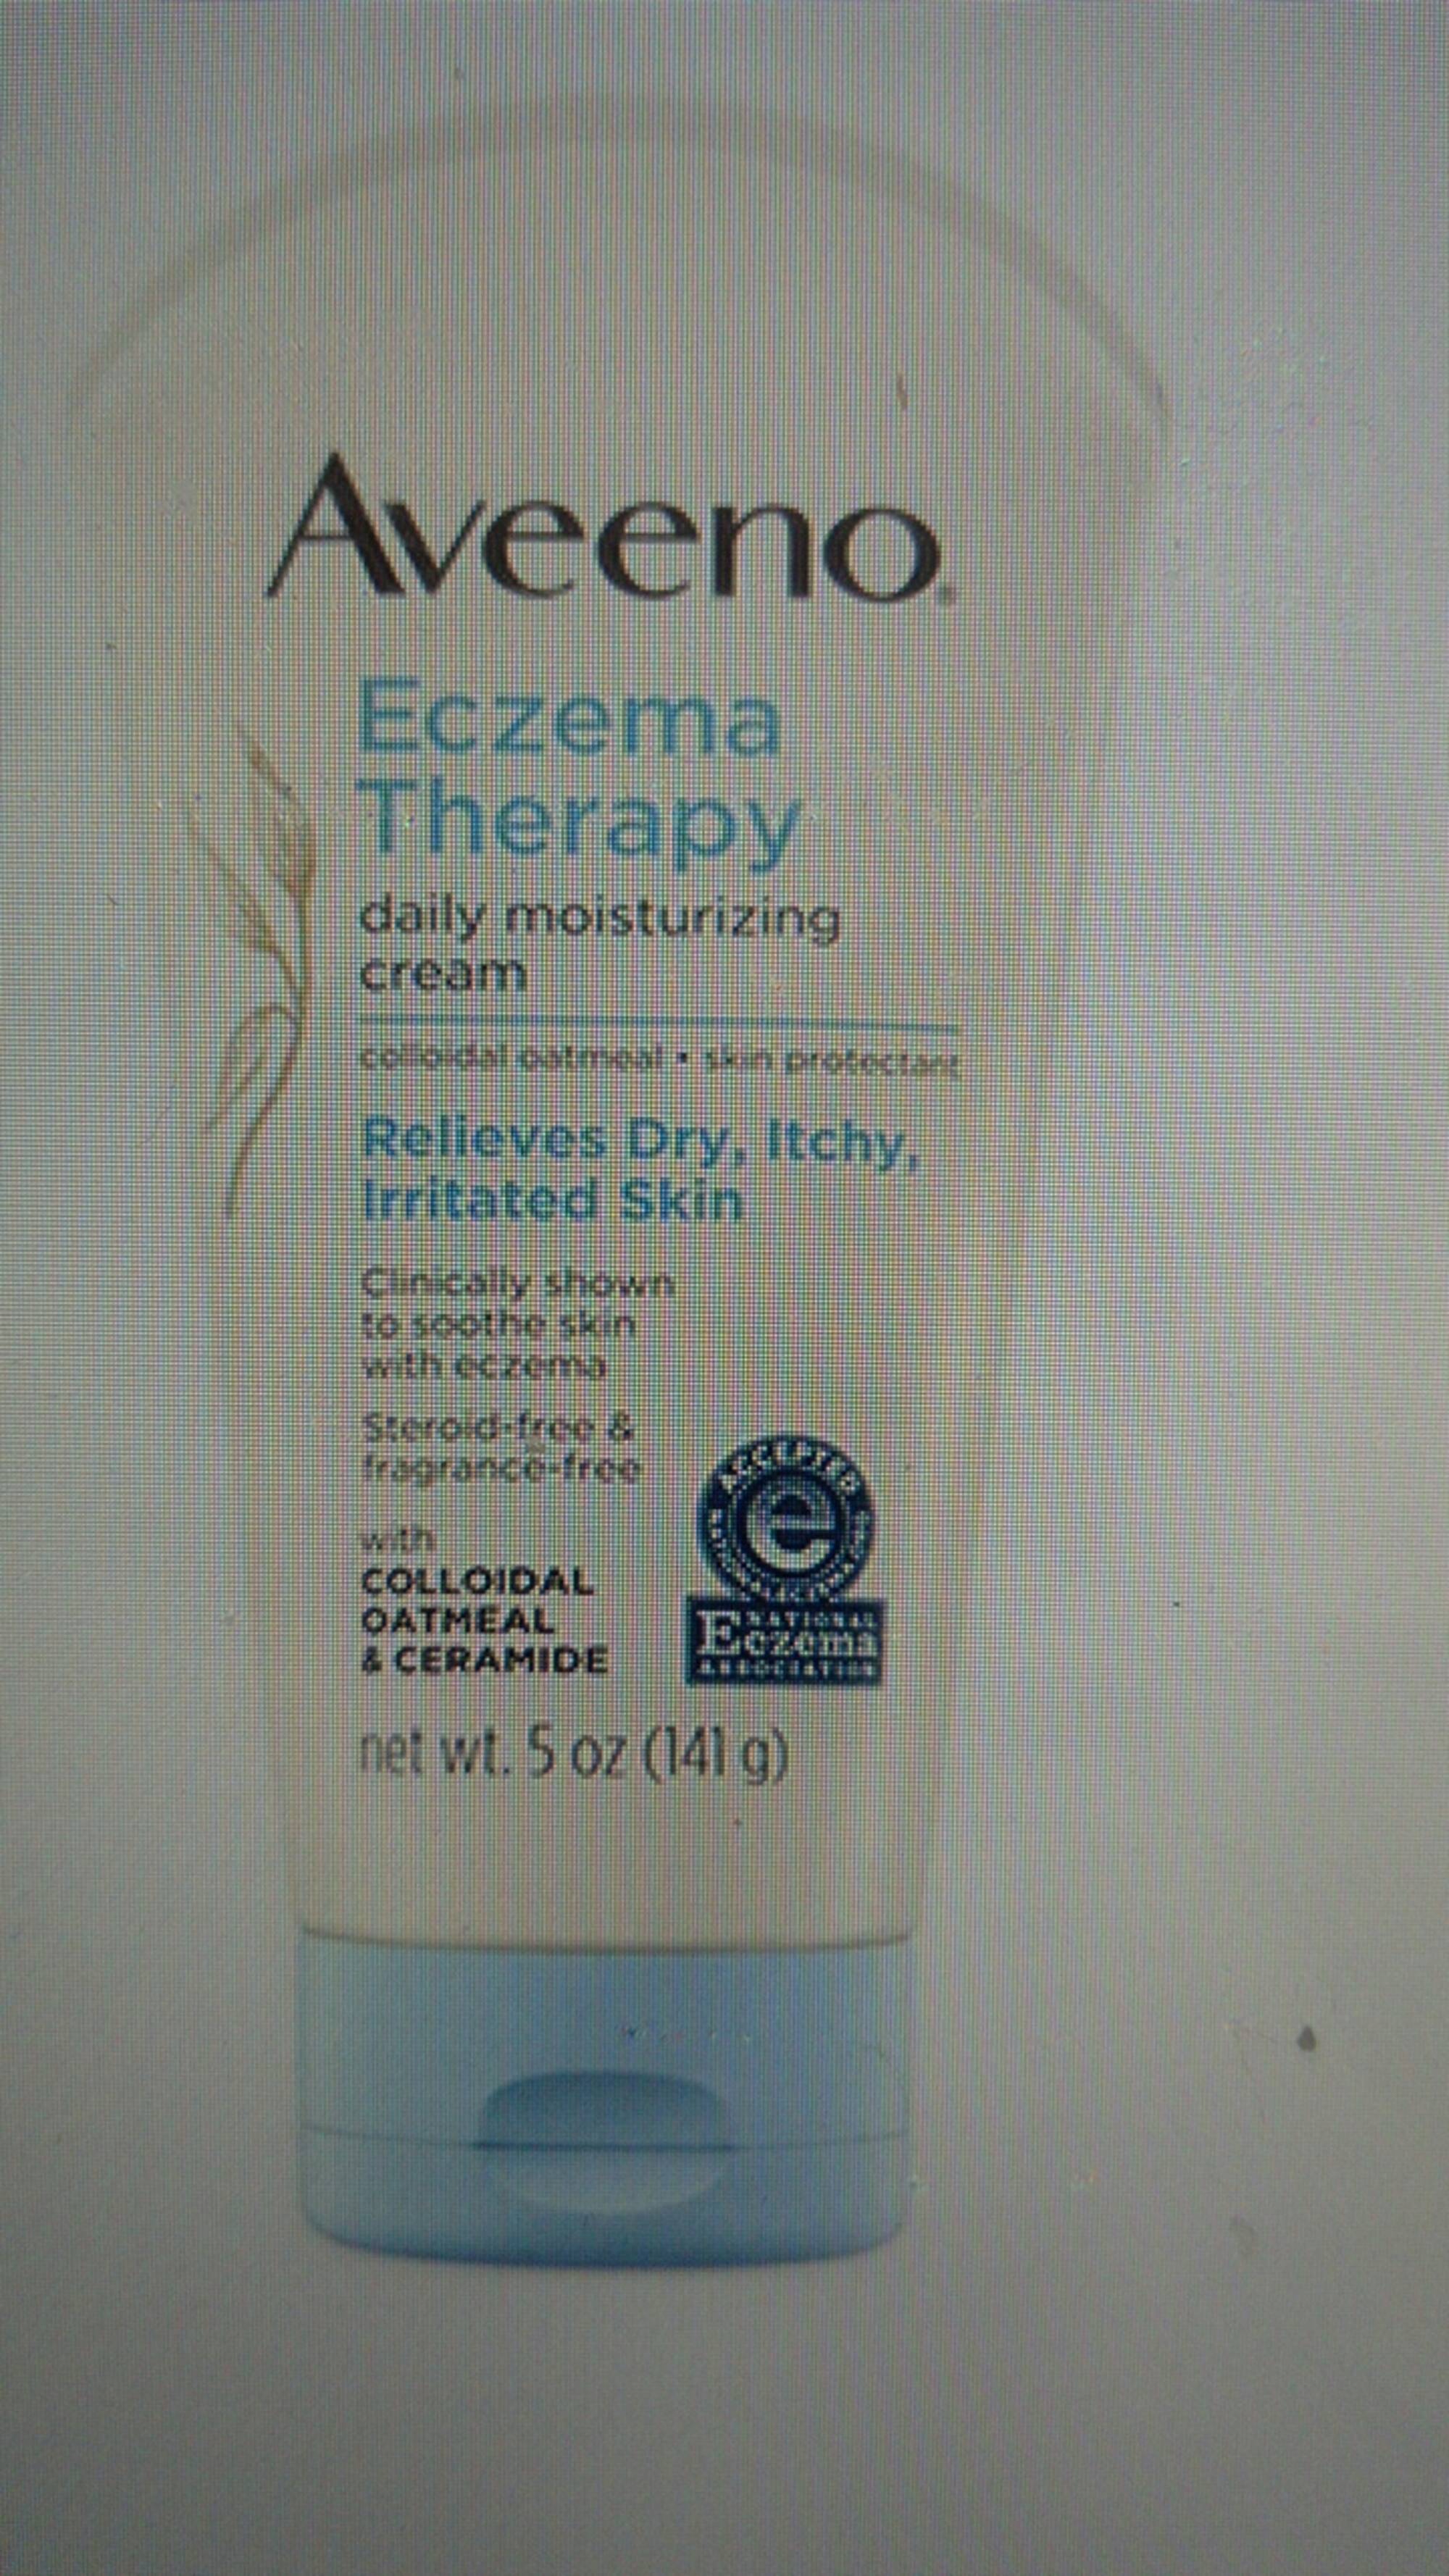 AVEENO - Eczema therapy - Daily moisturizing cream